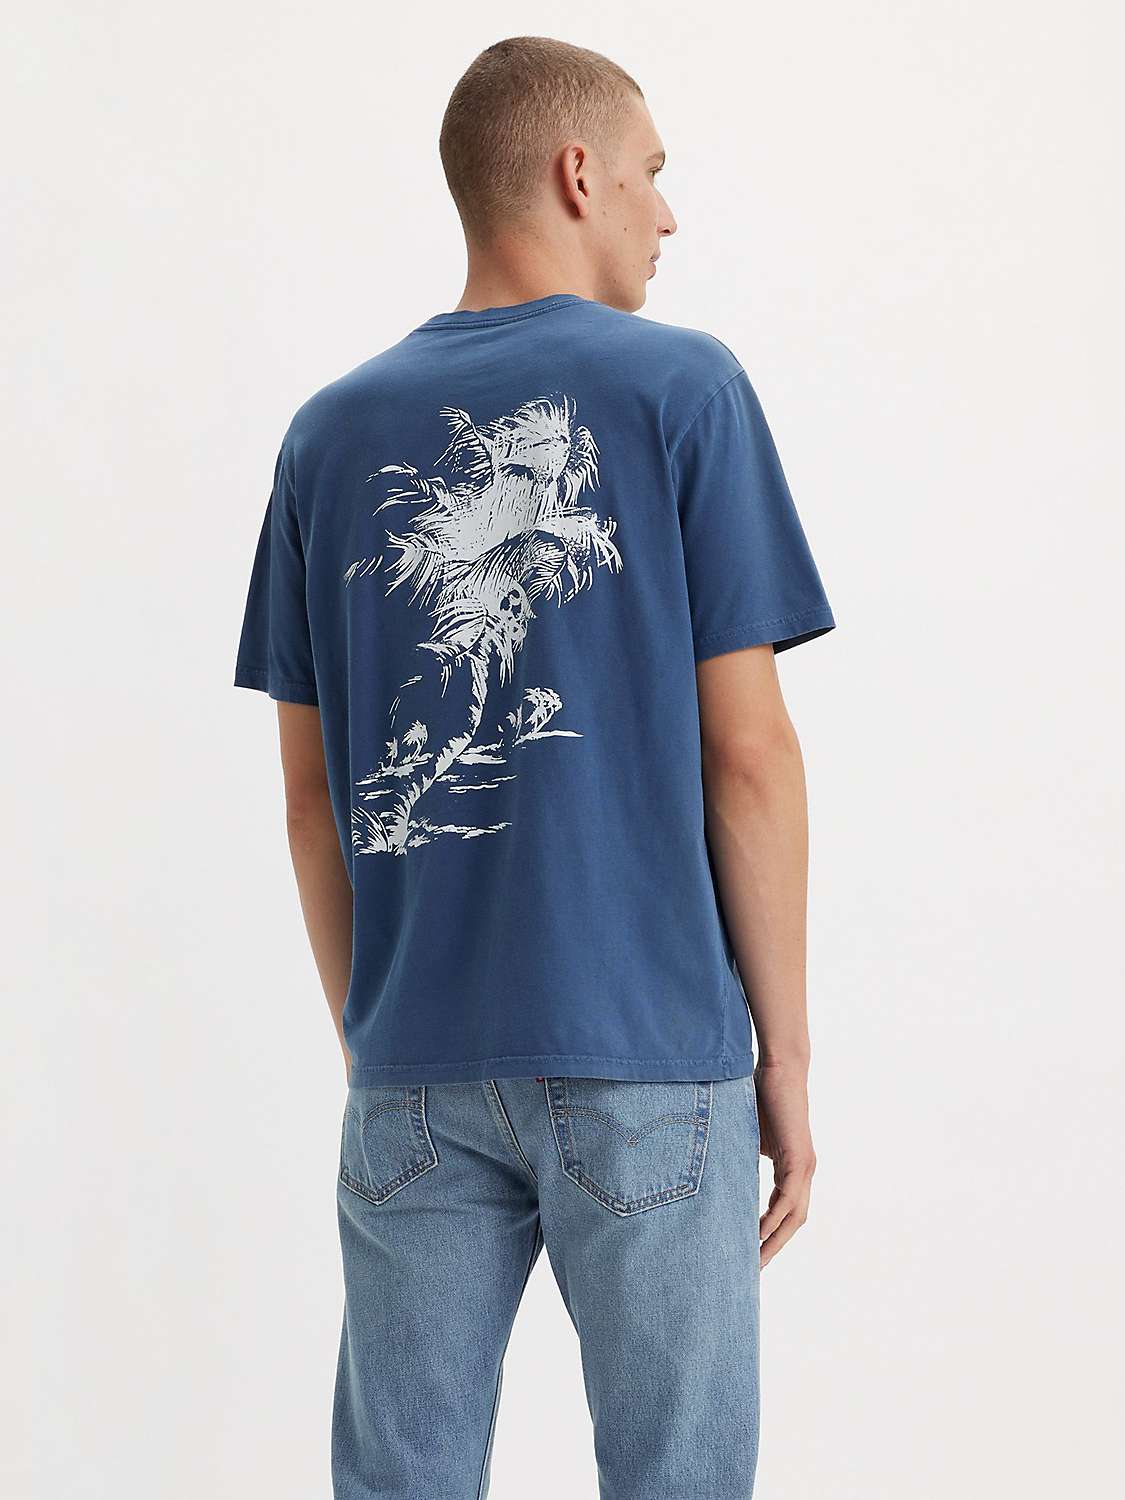 Buy Levi's Short Sleeve Relaxed Fit T-Shirt, Vintage Indigo Online at johnlewis.com